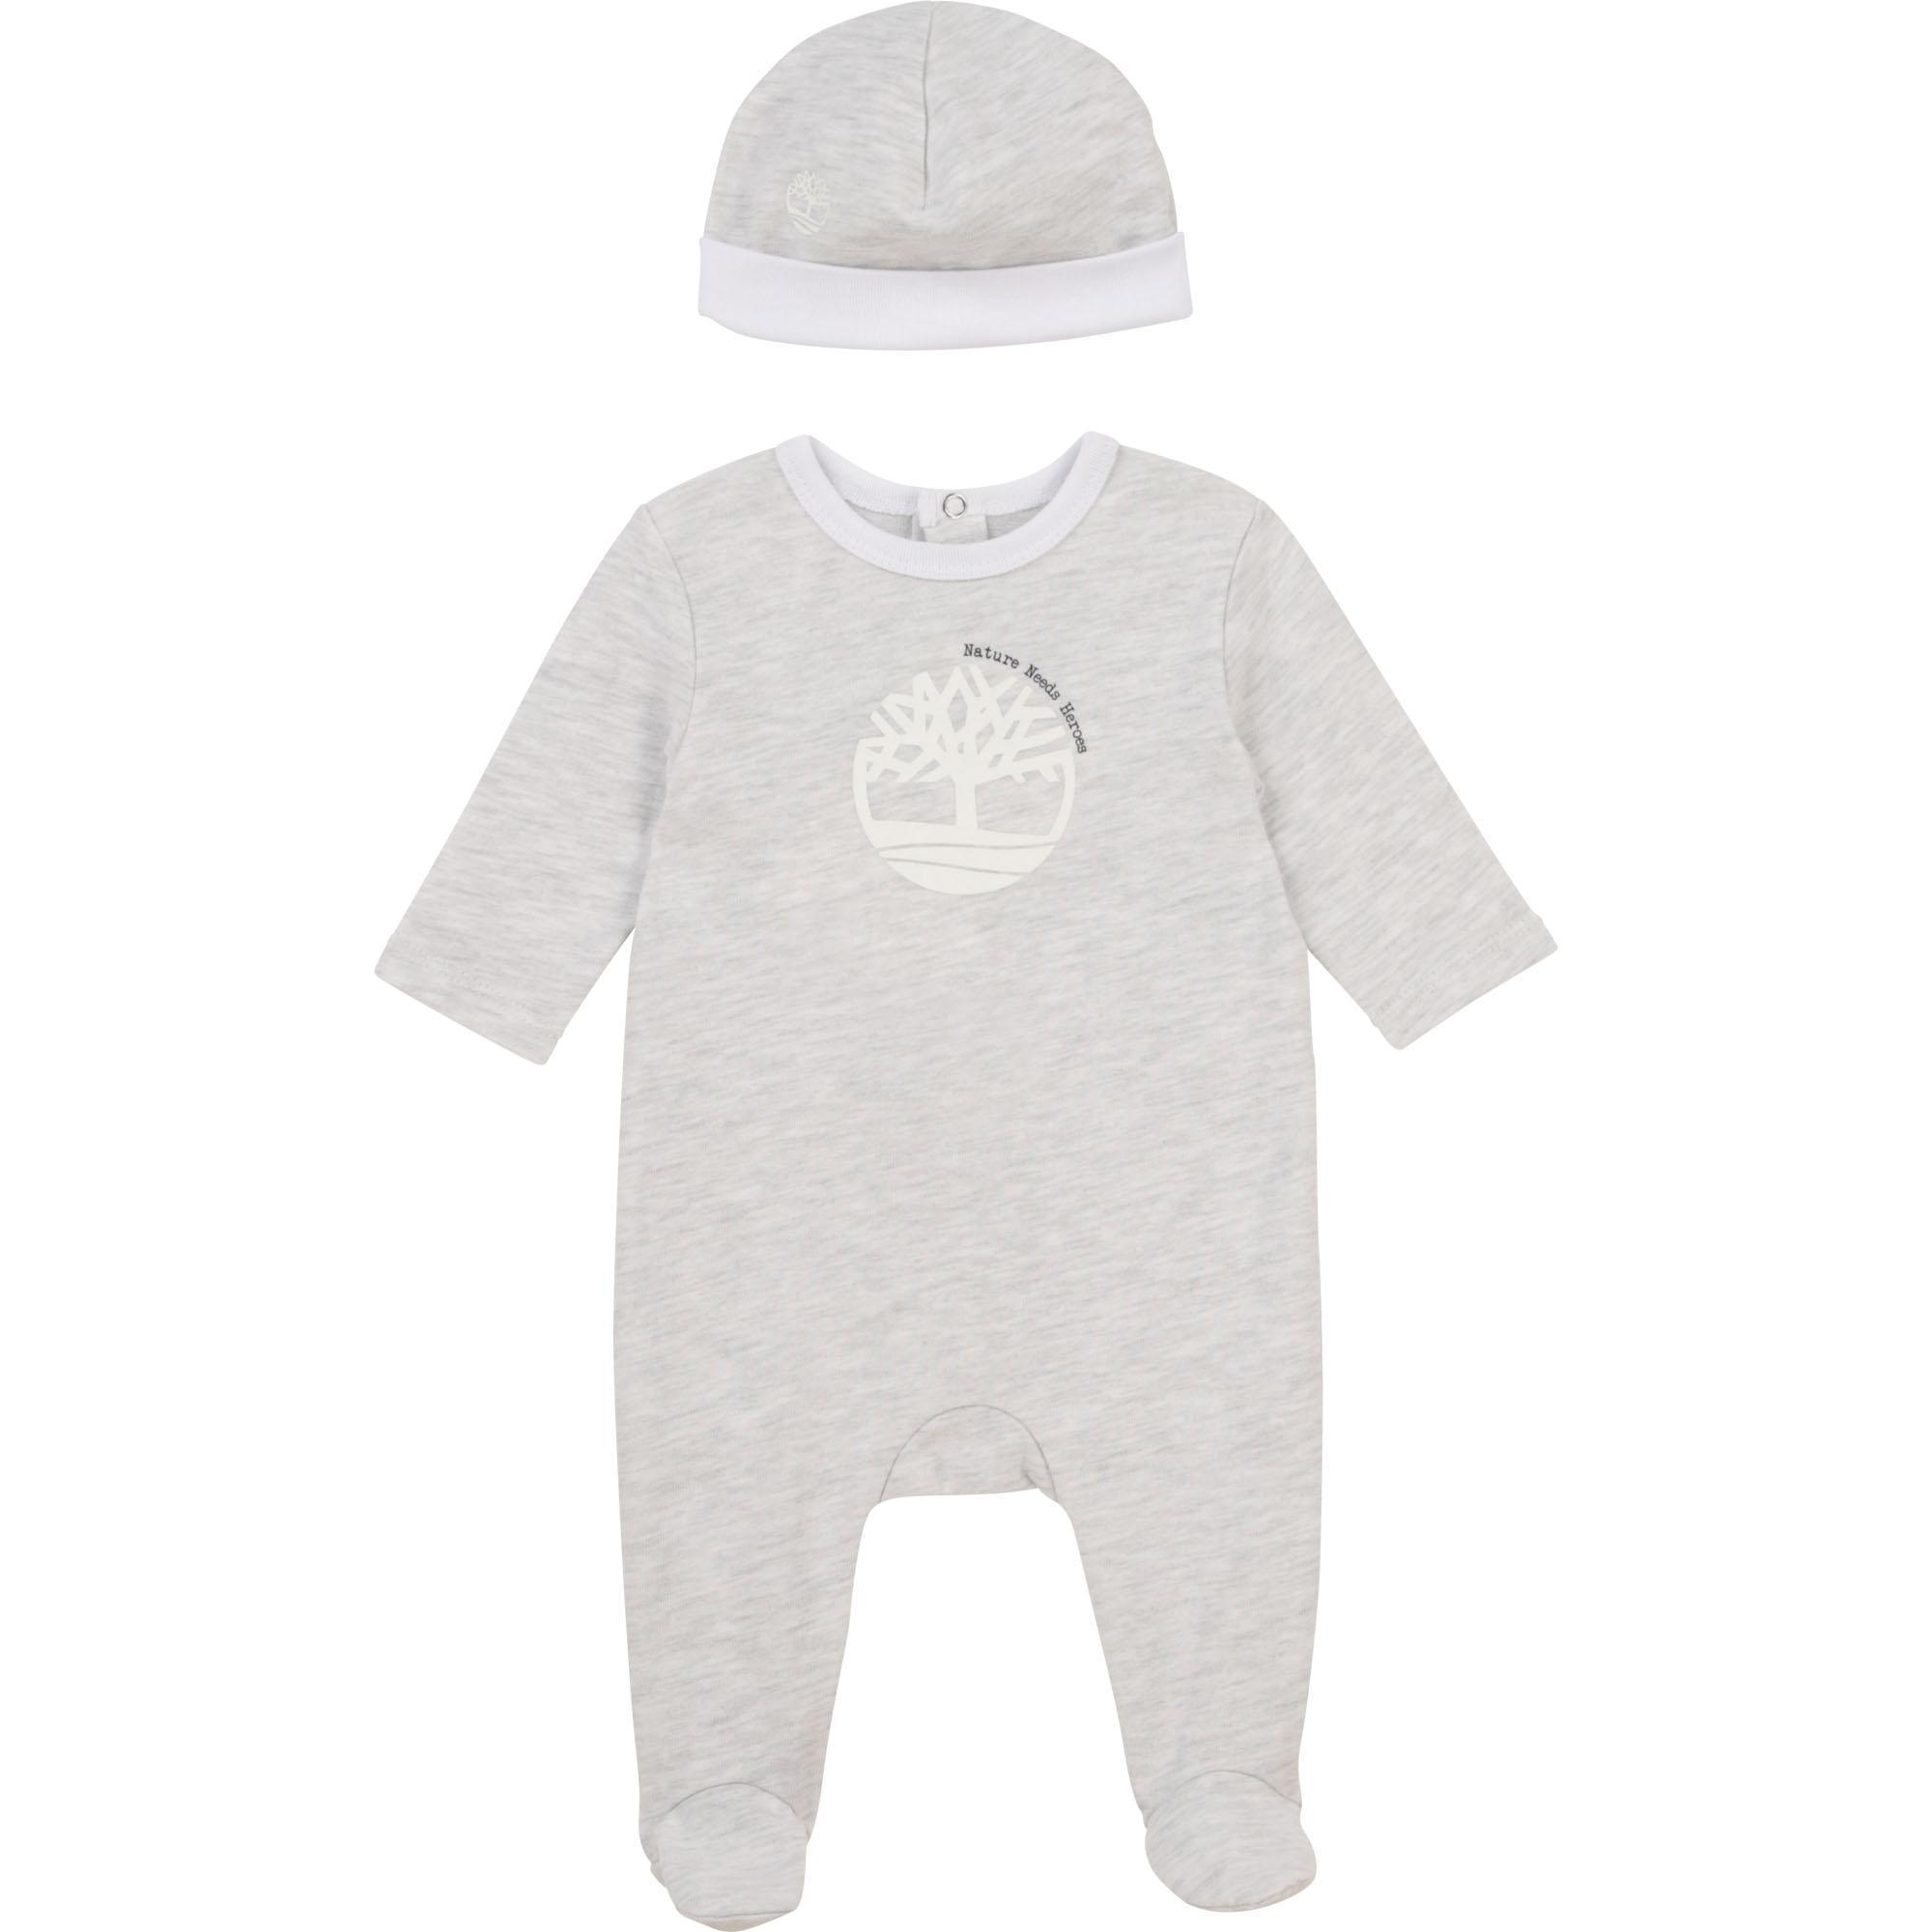 llamar En la cabeza de Sostener Timberland Newborn Save The Planet Pyjamas Set - Kids Life Clothing -  Children's designer clothing